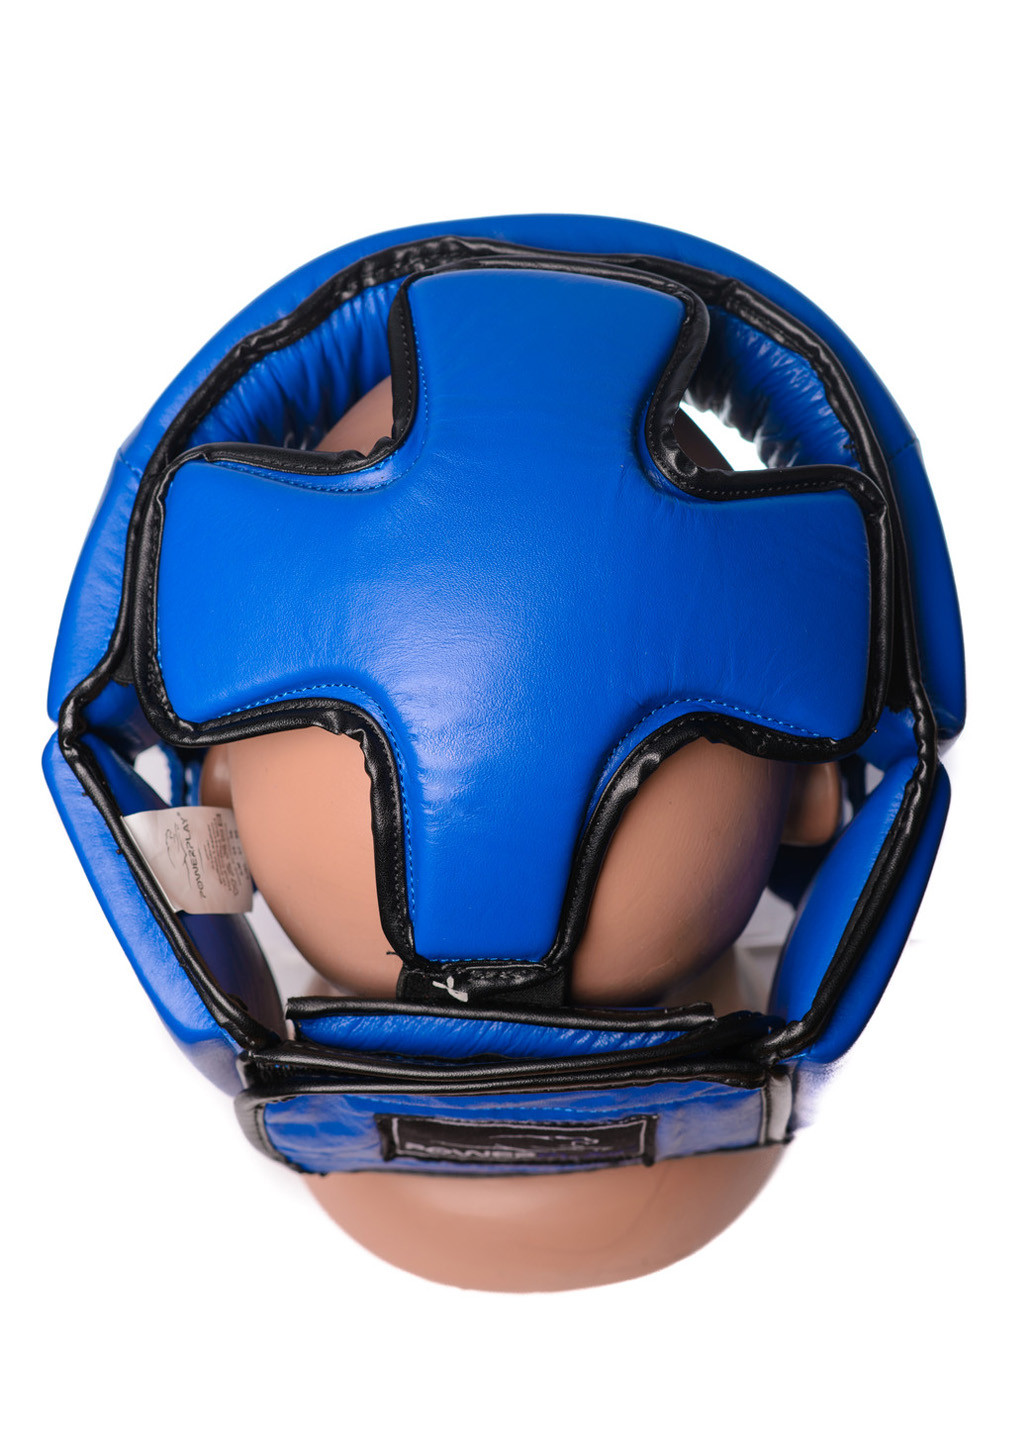 Боксерский шлем S PowerPlay (196422591)